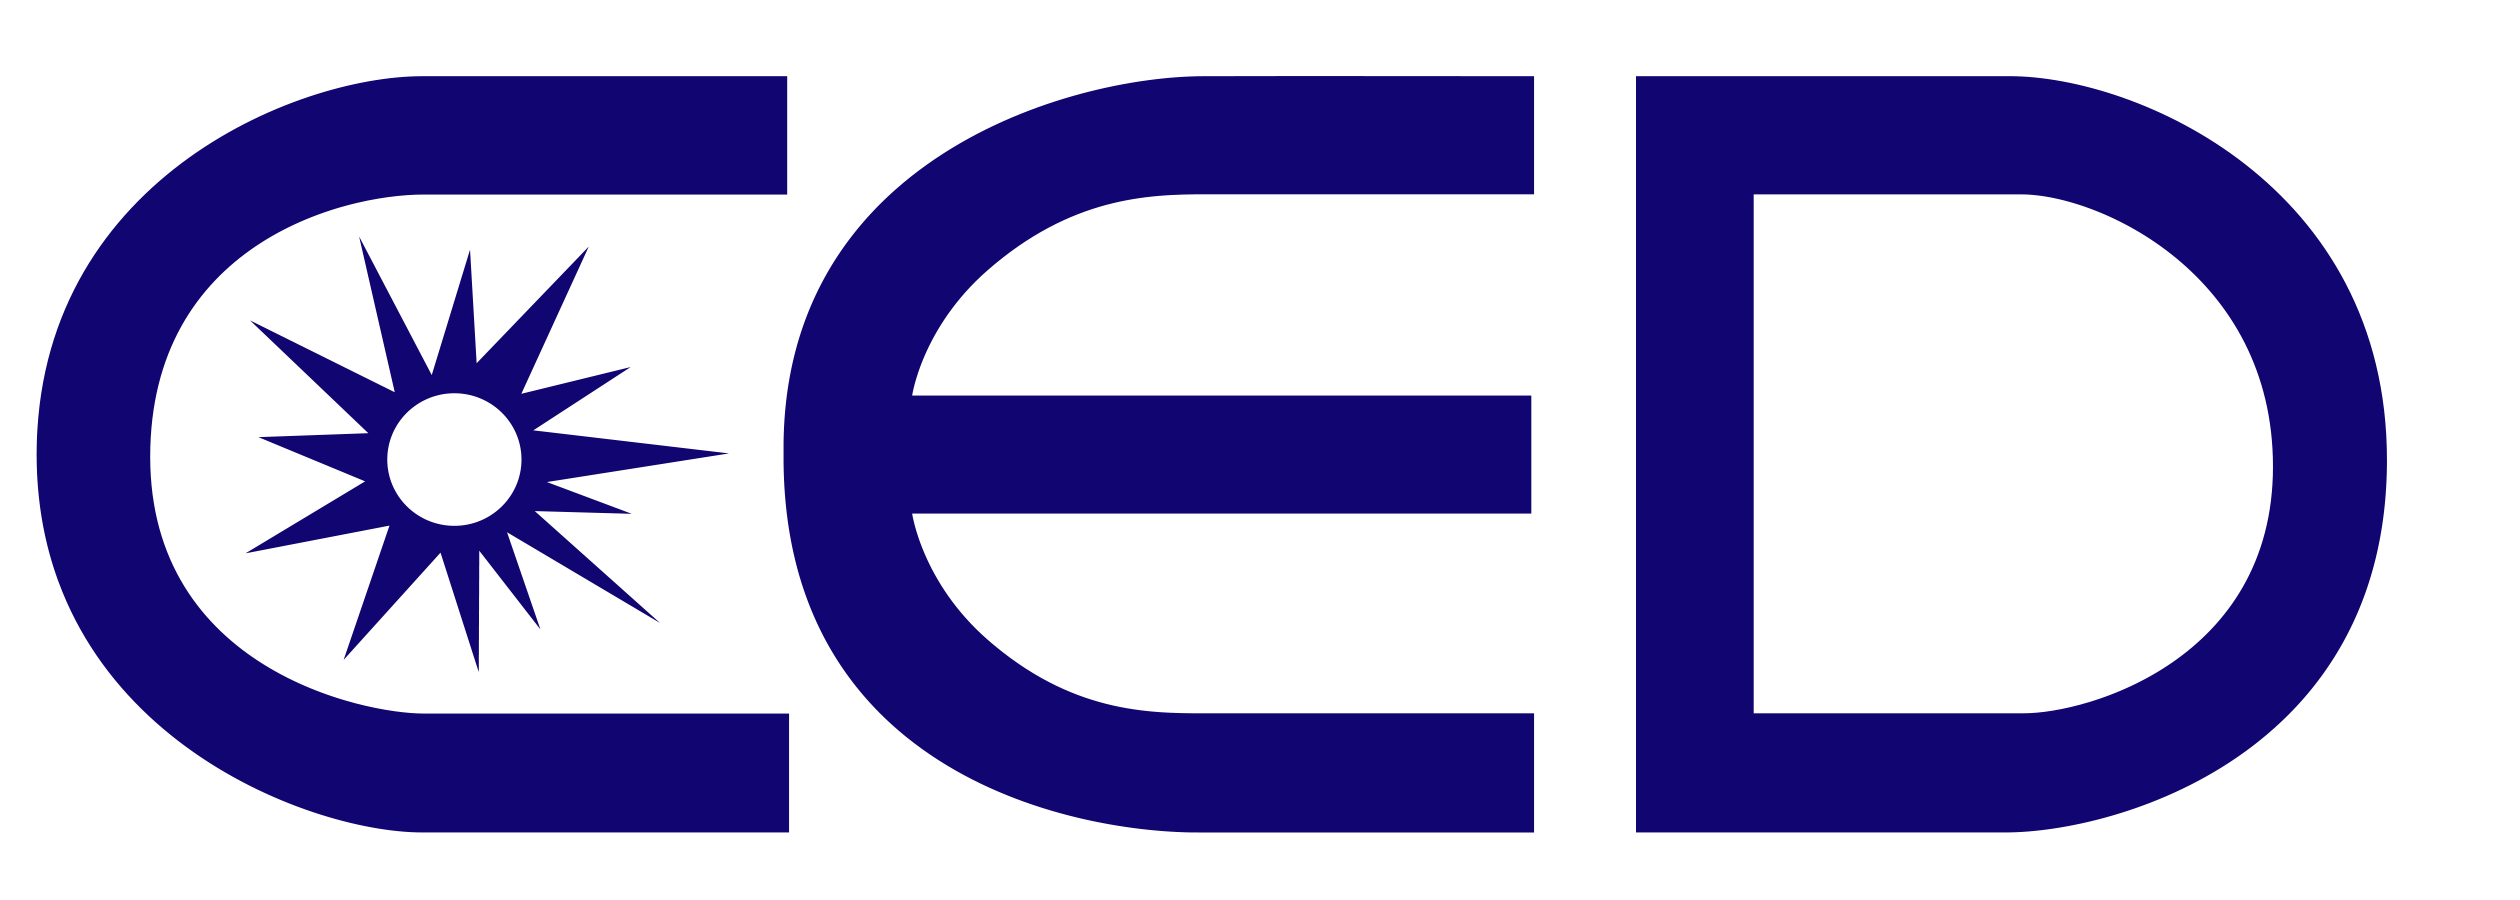 CED Logo - CED Logo Career Services